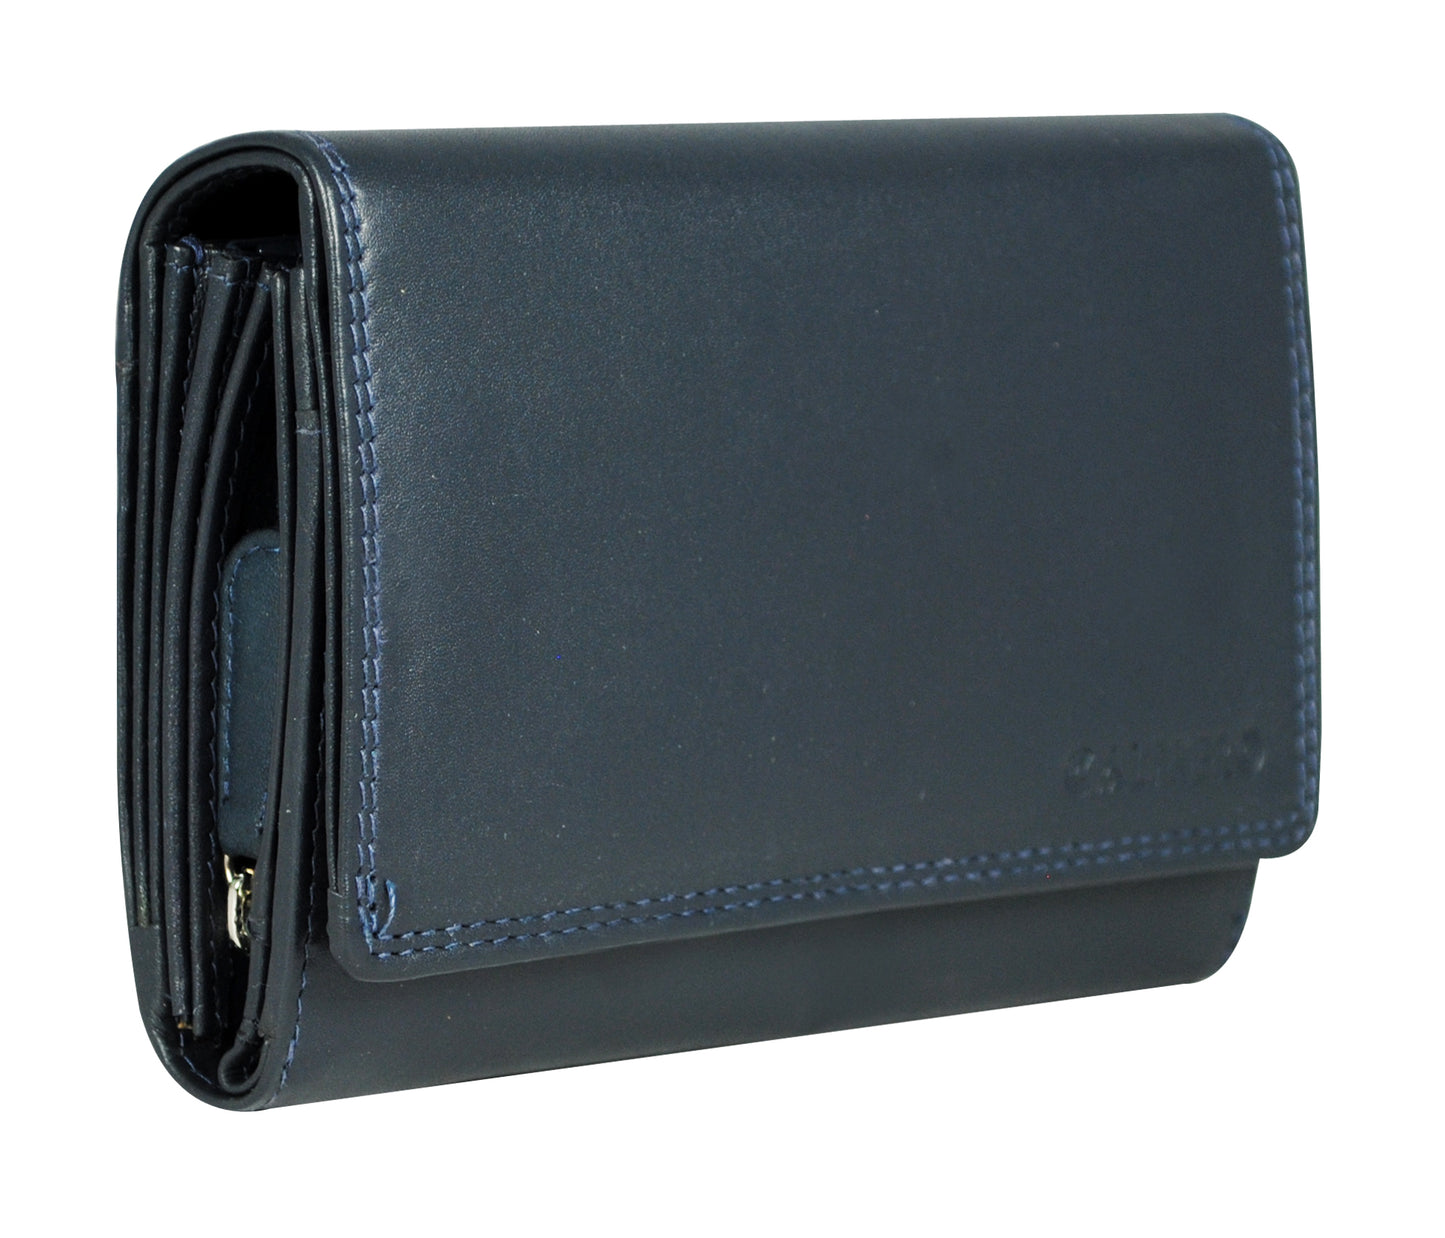 Calfnero Genuine Leather Women's Wallet (L-04-Navy)